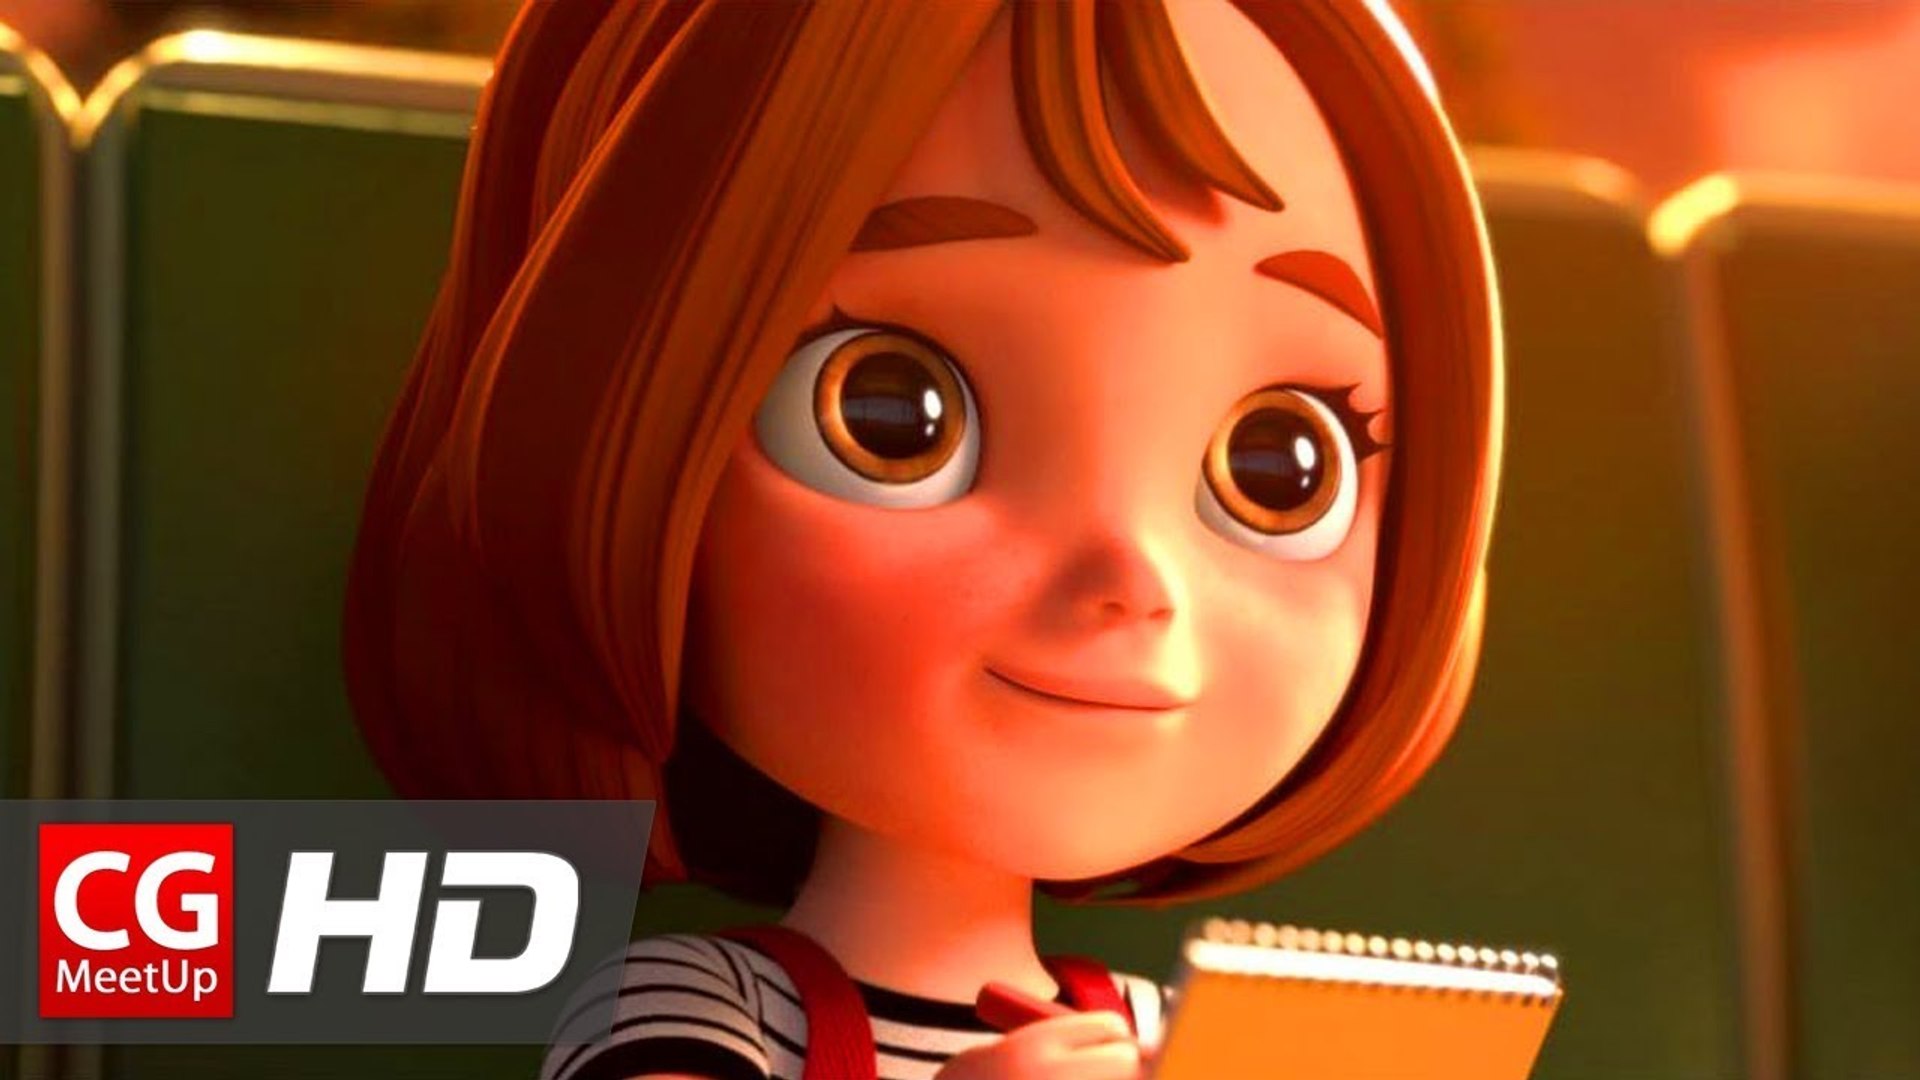 CGI Animated Short Film: "Dear Alice" by Matt Cerini | CGMeetup - video  Dailymotion